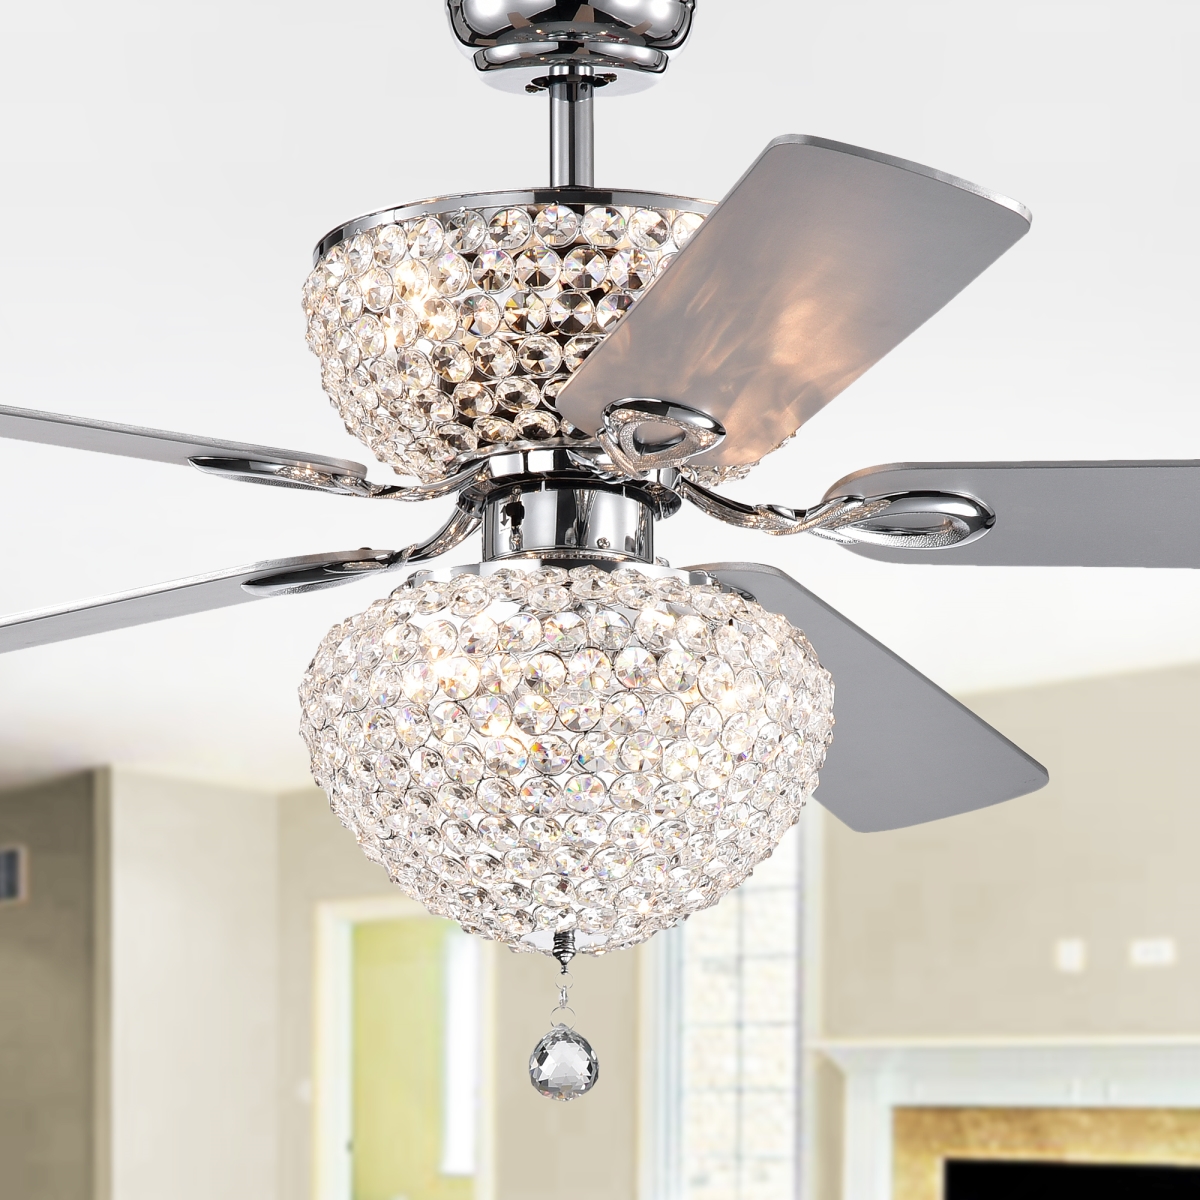 Cfl-8176remo-chd Swarana Dual Lighted Ceiling Fan With Crystal Shades, Chrome